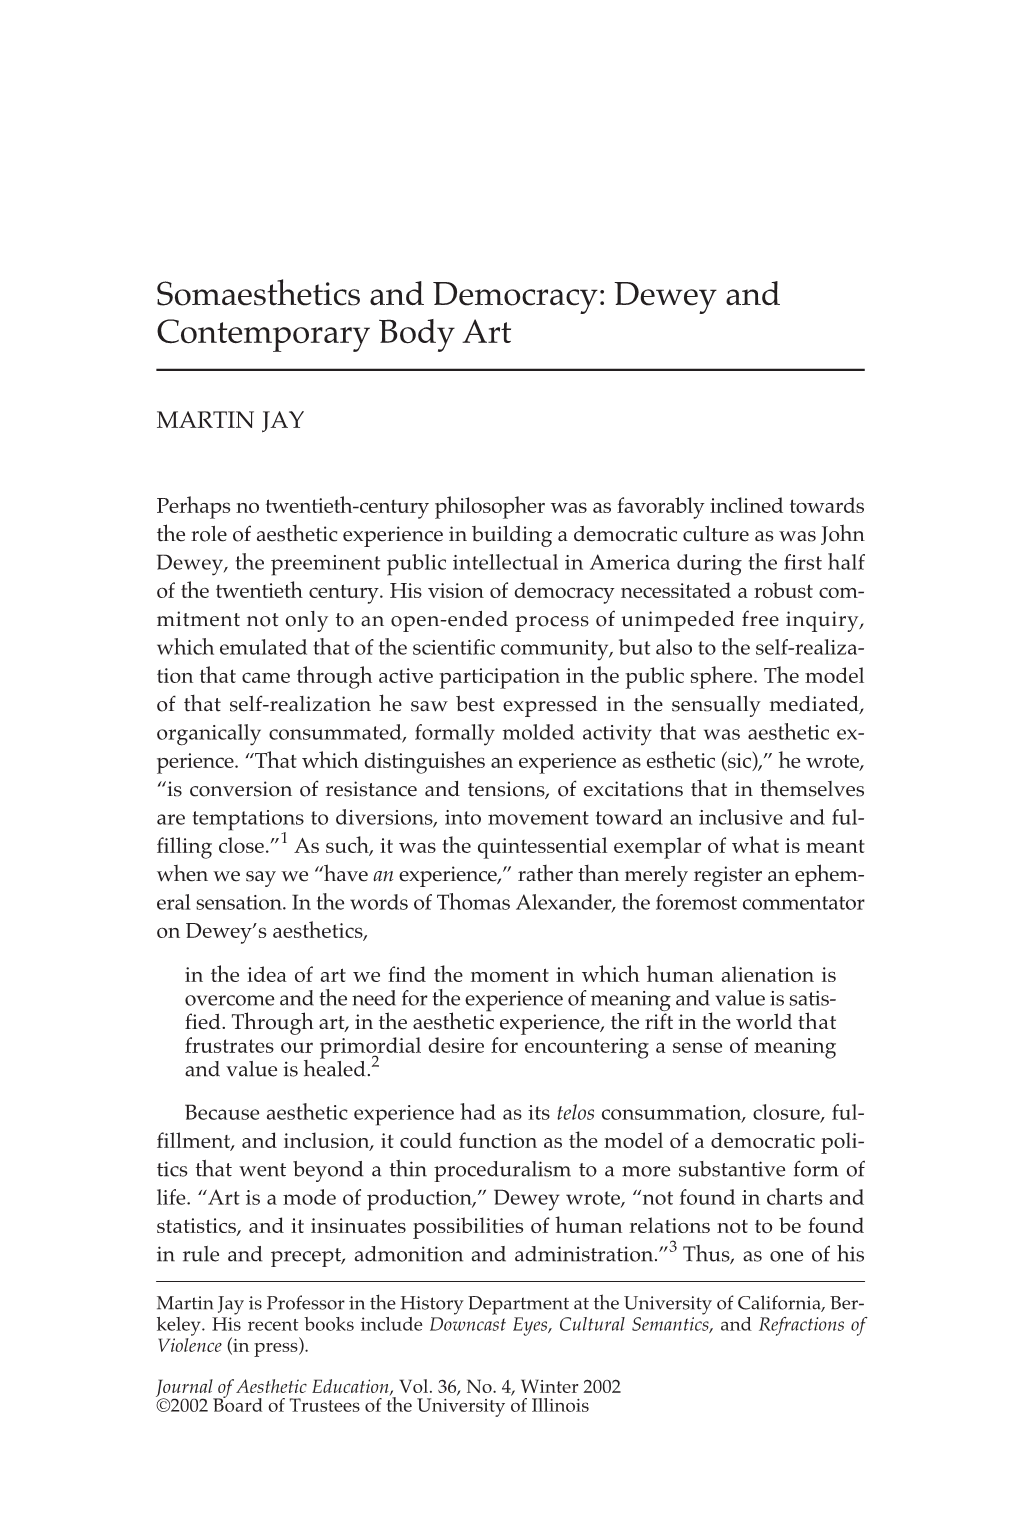 Somaesthetics and Democracy: Dewey and Contemporary Body Art